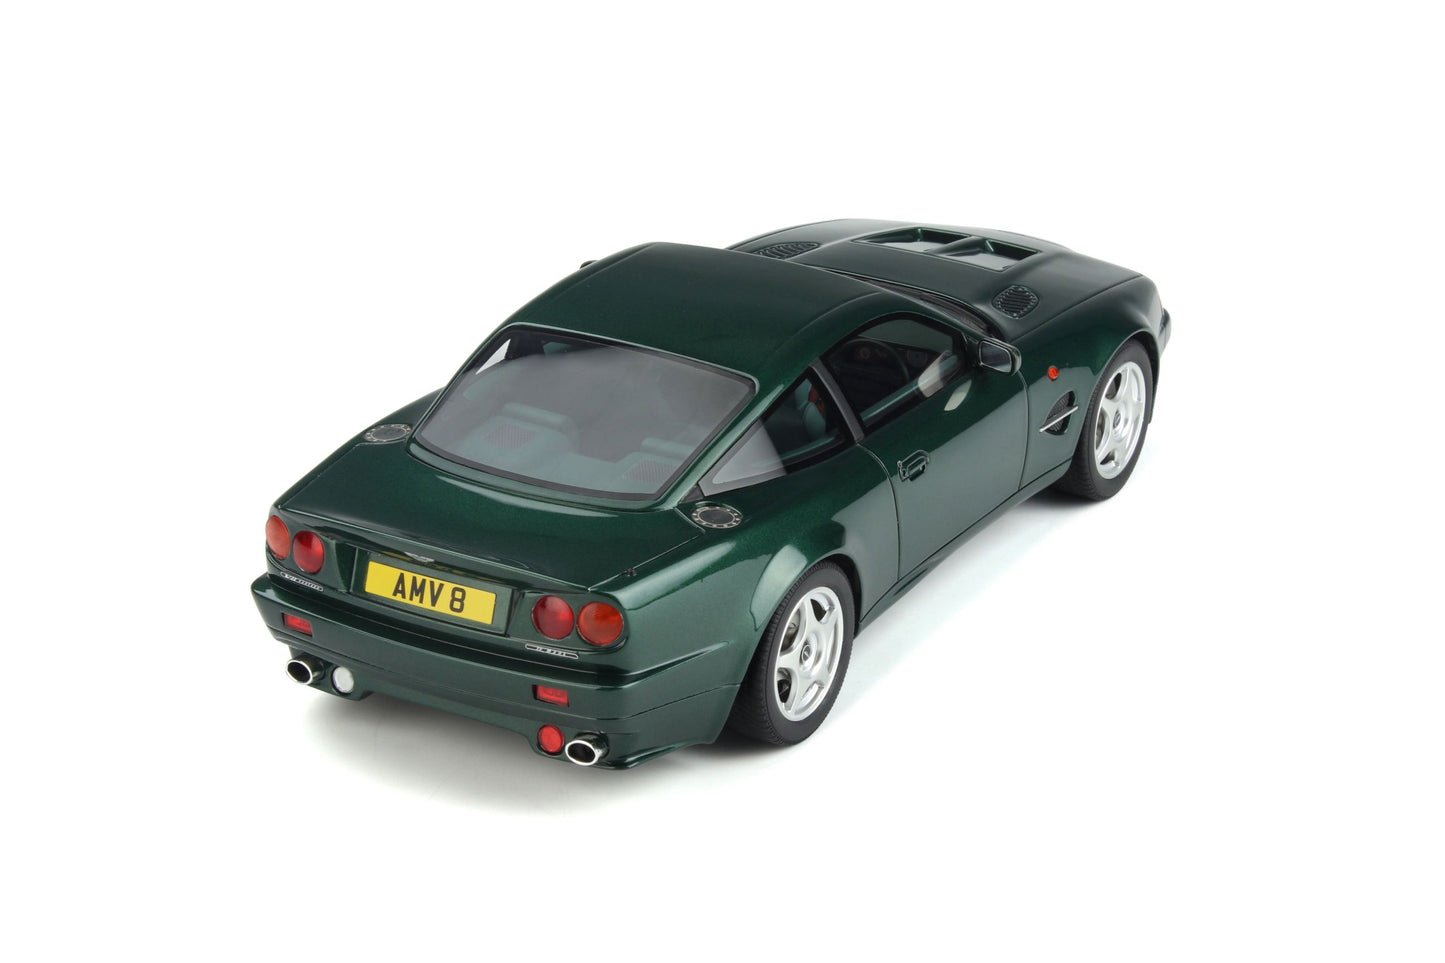 GT Spirit - Aston Martin V8 Vantage Le Mans (British Racing Green) 1:18 Scale Model Car